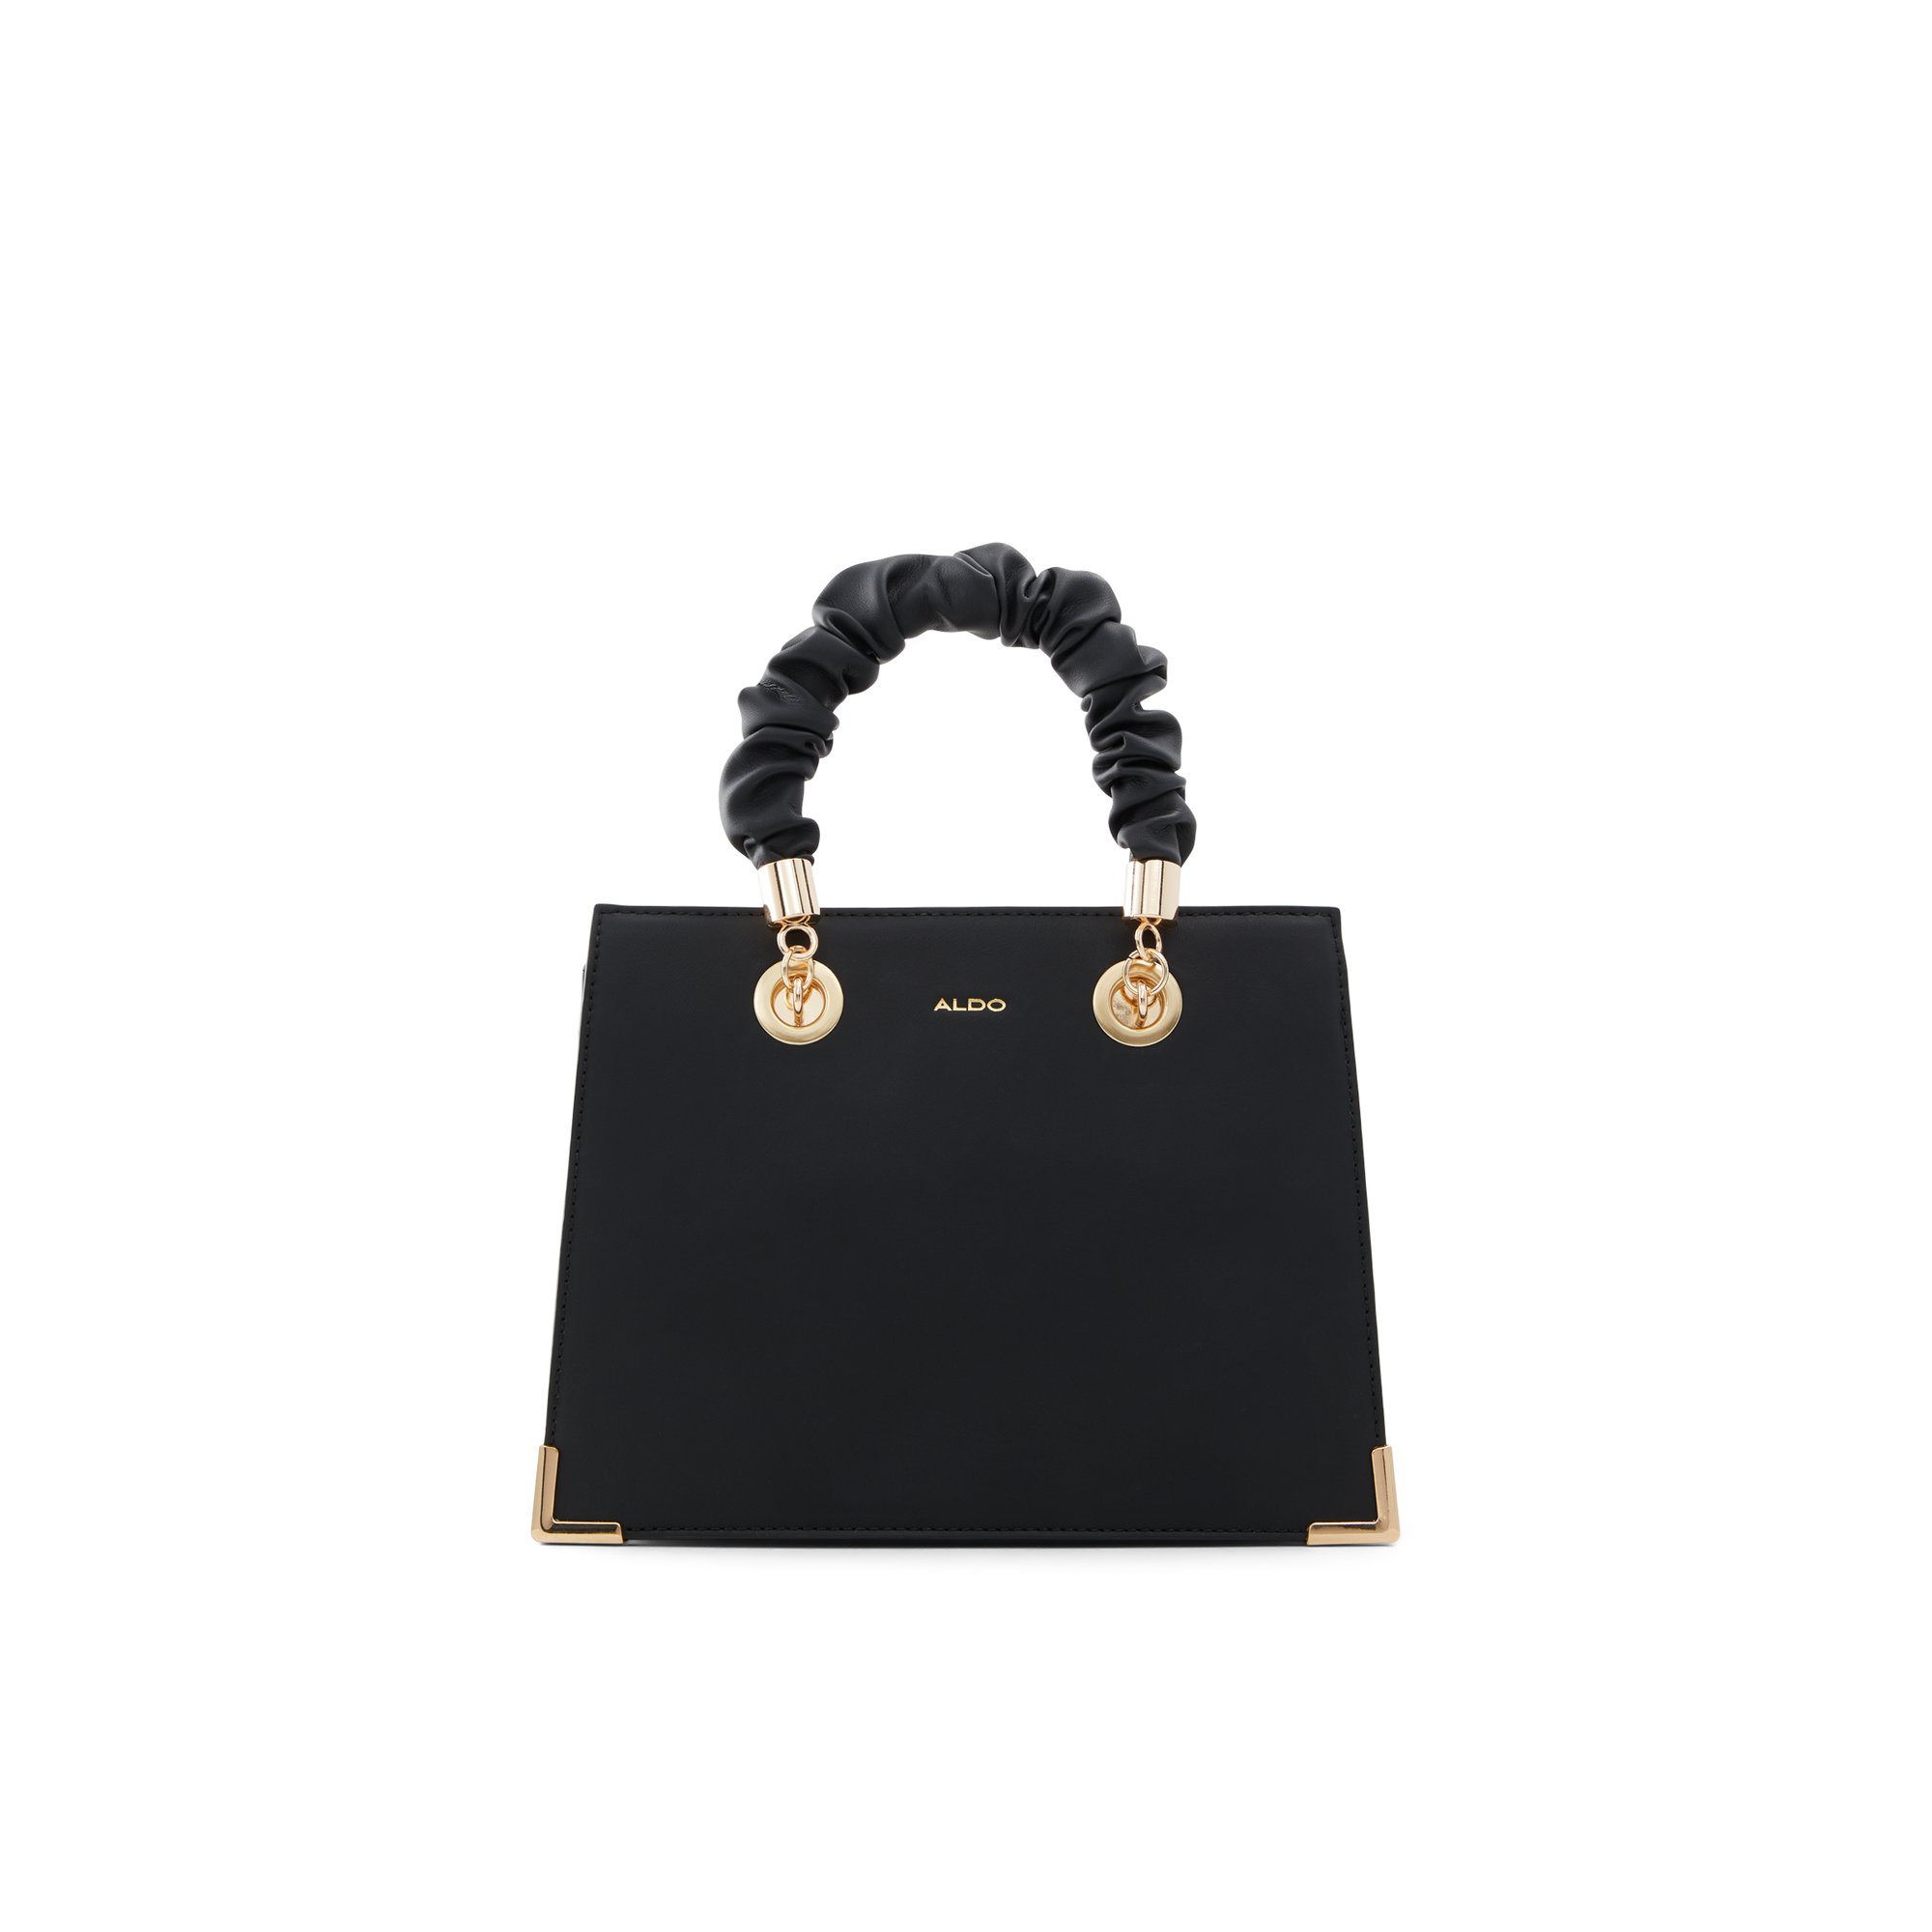 ALDO Bilitha - Women's Handbags Totes - Black